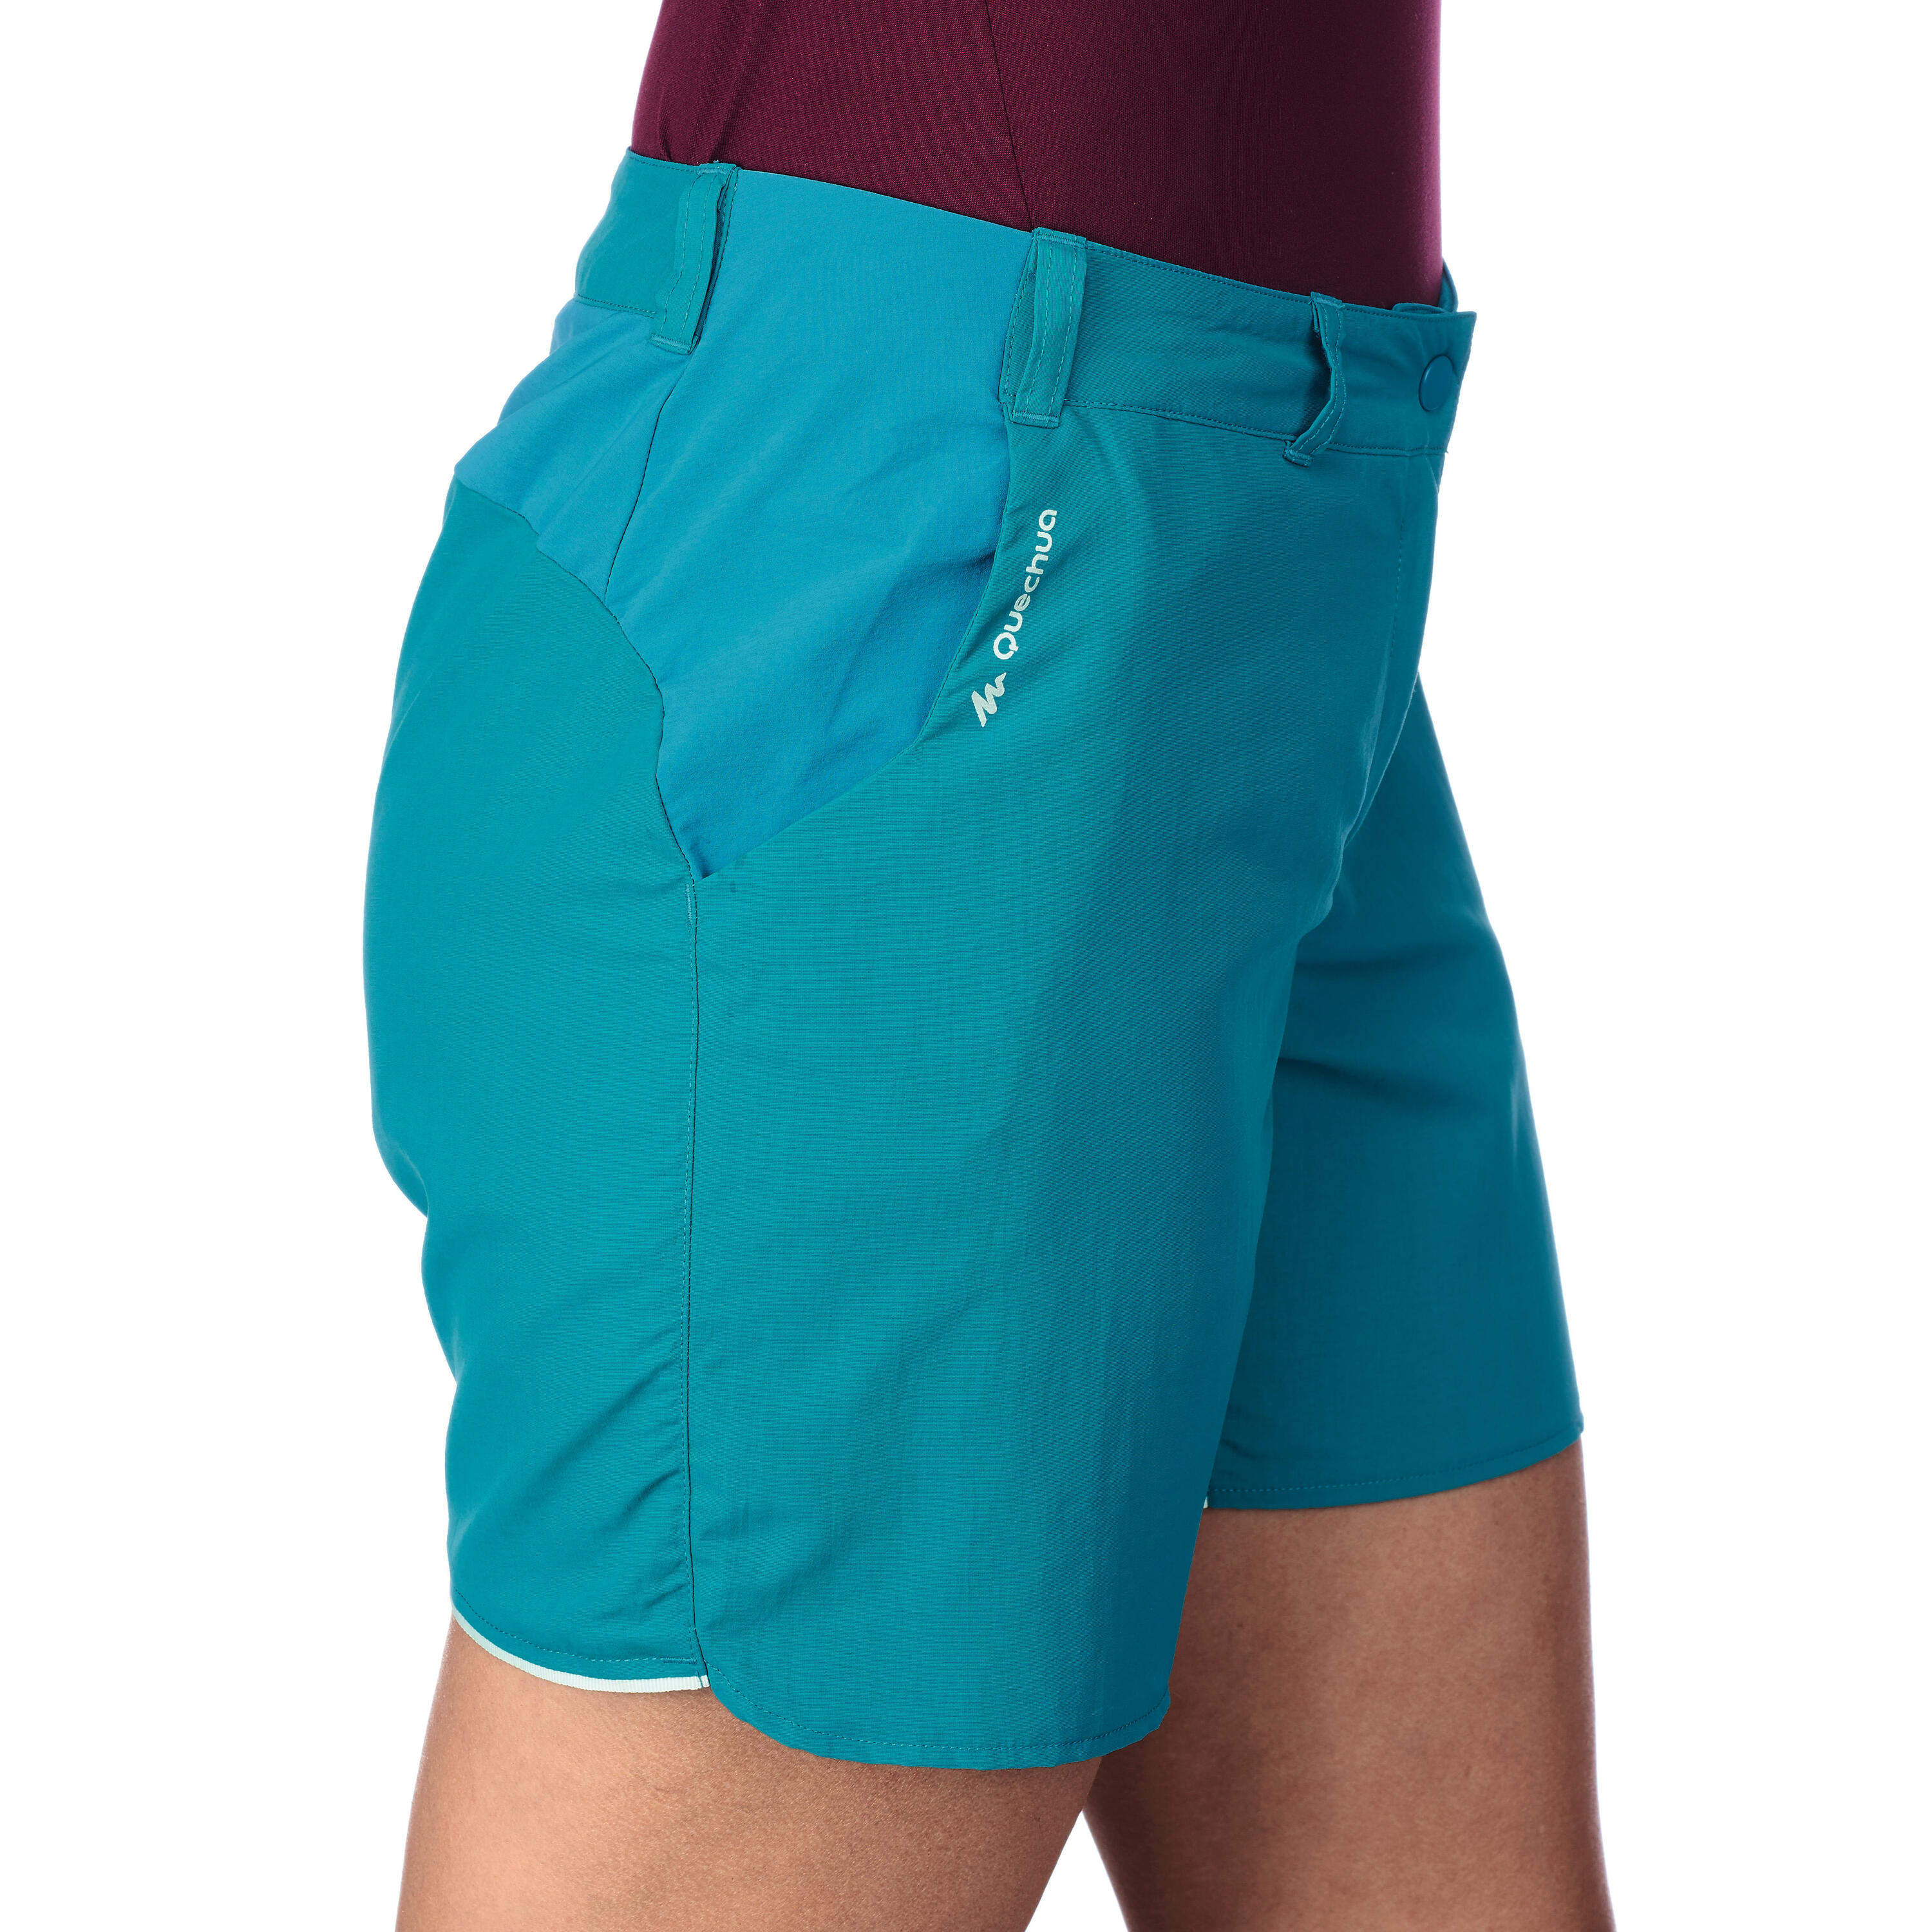 MH100 Women's Mountain Hiking Shorts - Turquoise Blue 3/7